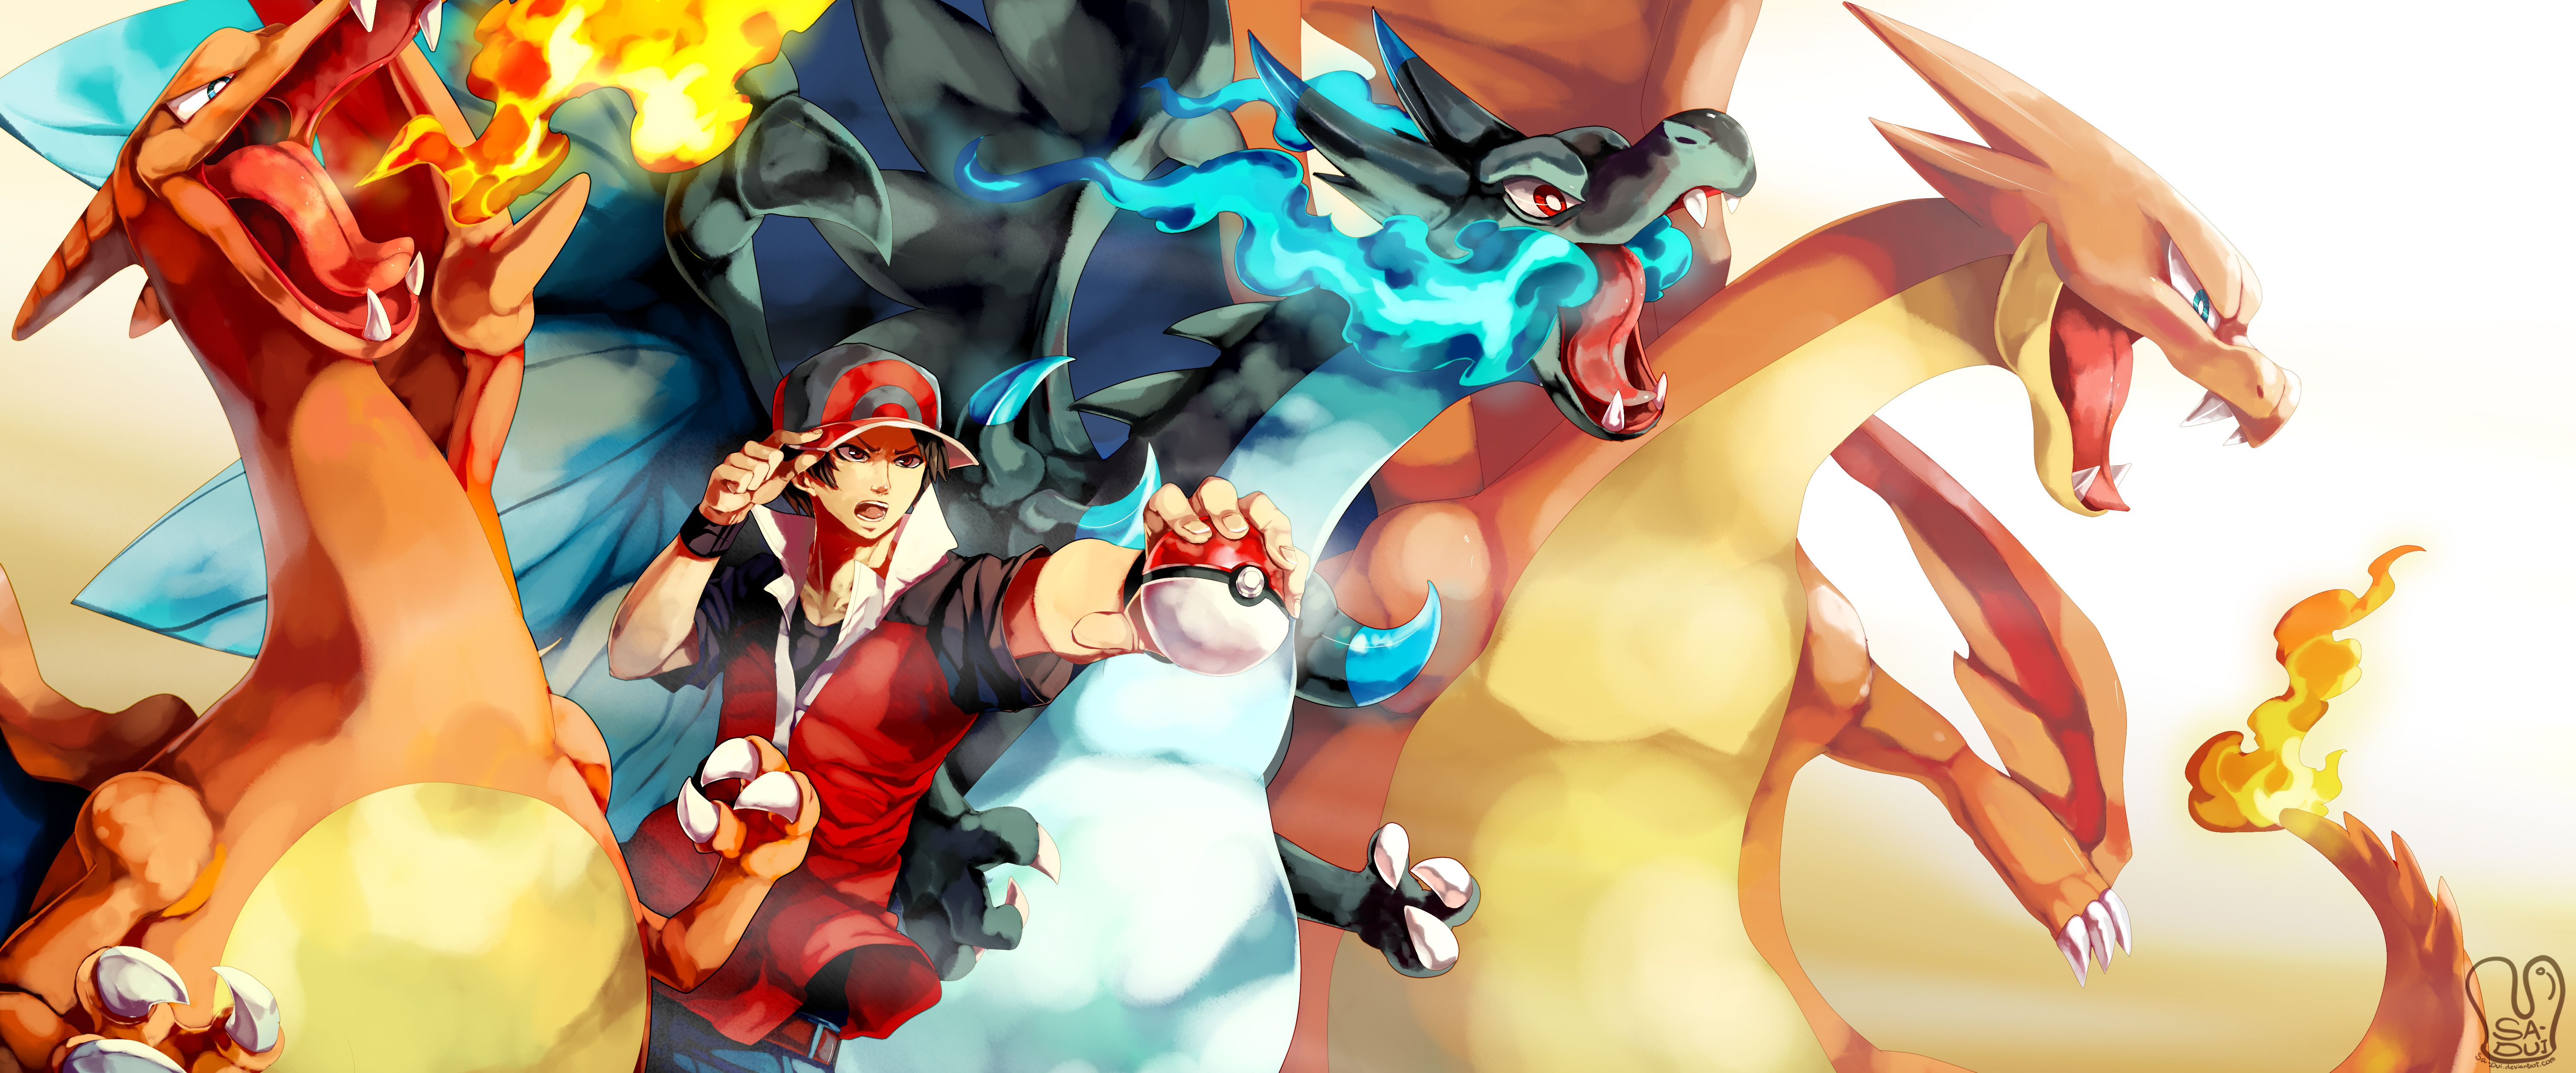 Pokemon Red Wallpaper by Roxxas21 on DeviantArt